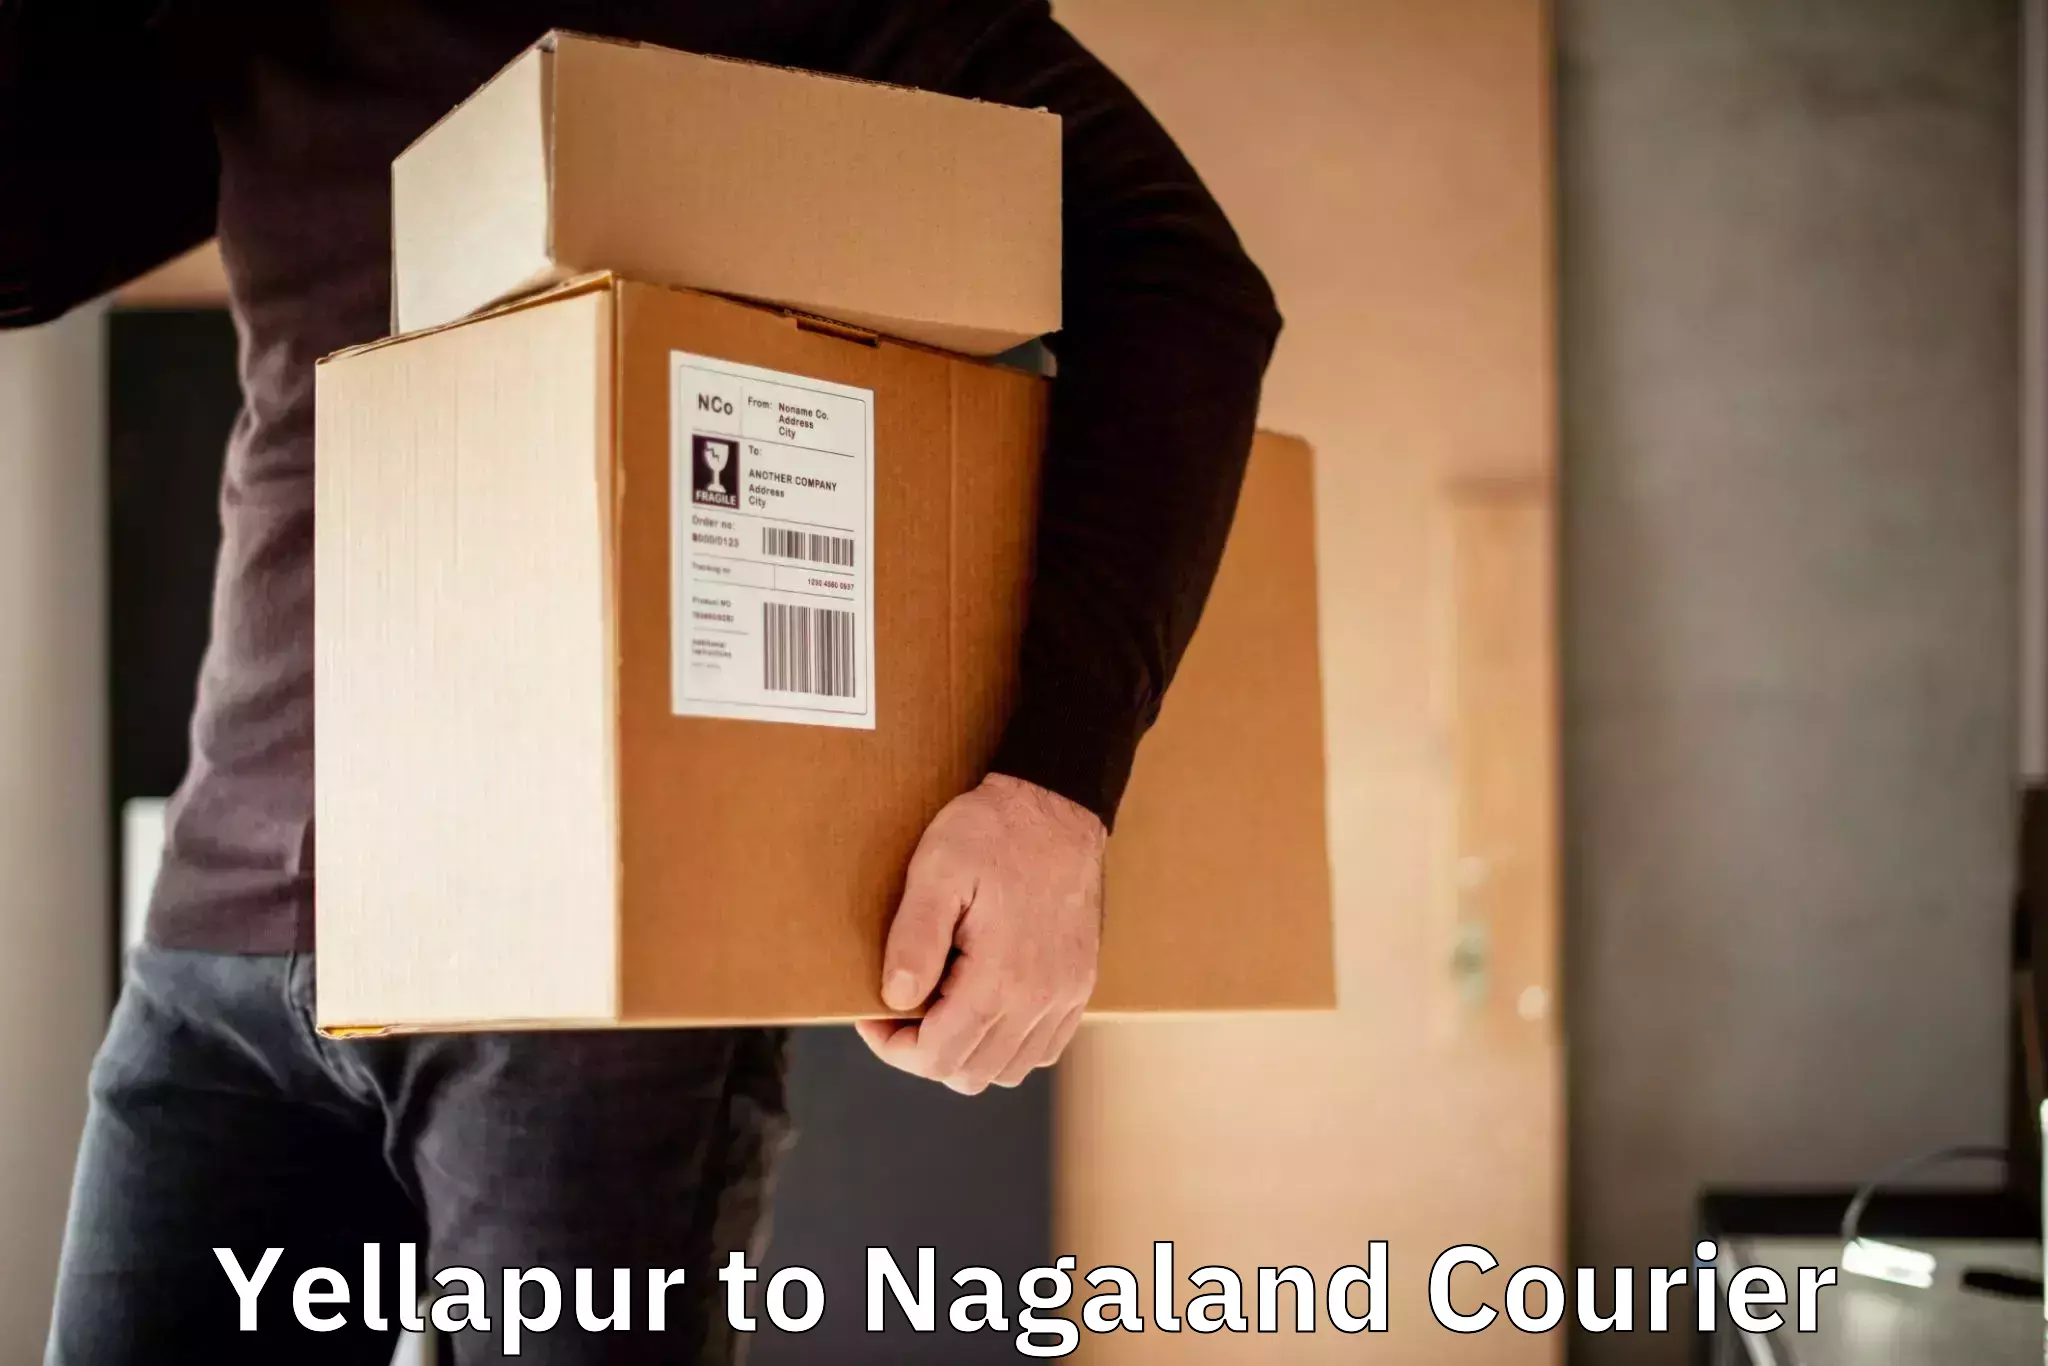 Enhanced tracking features Yellapur to Nagaland